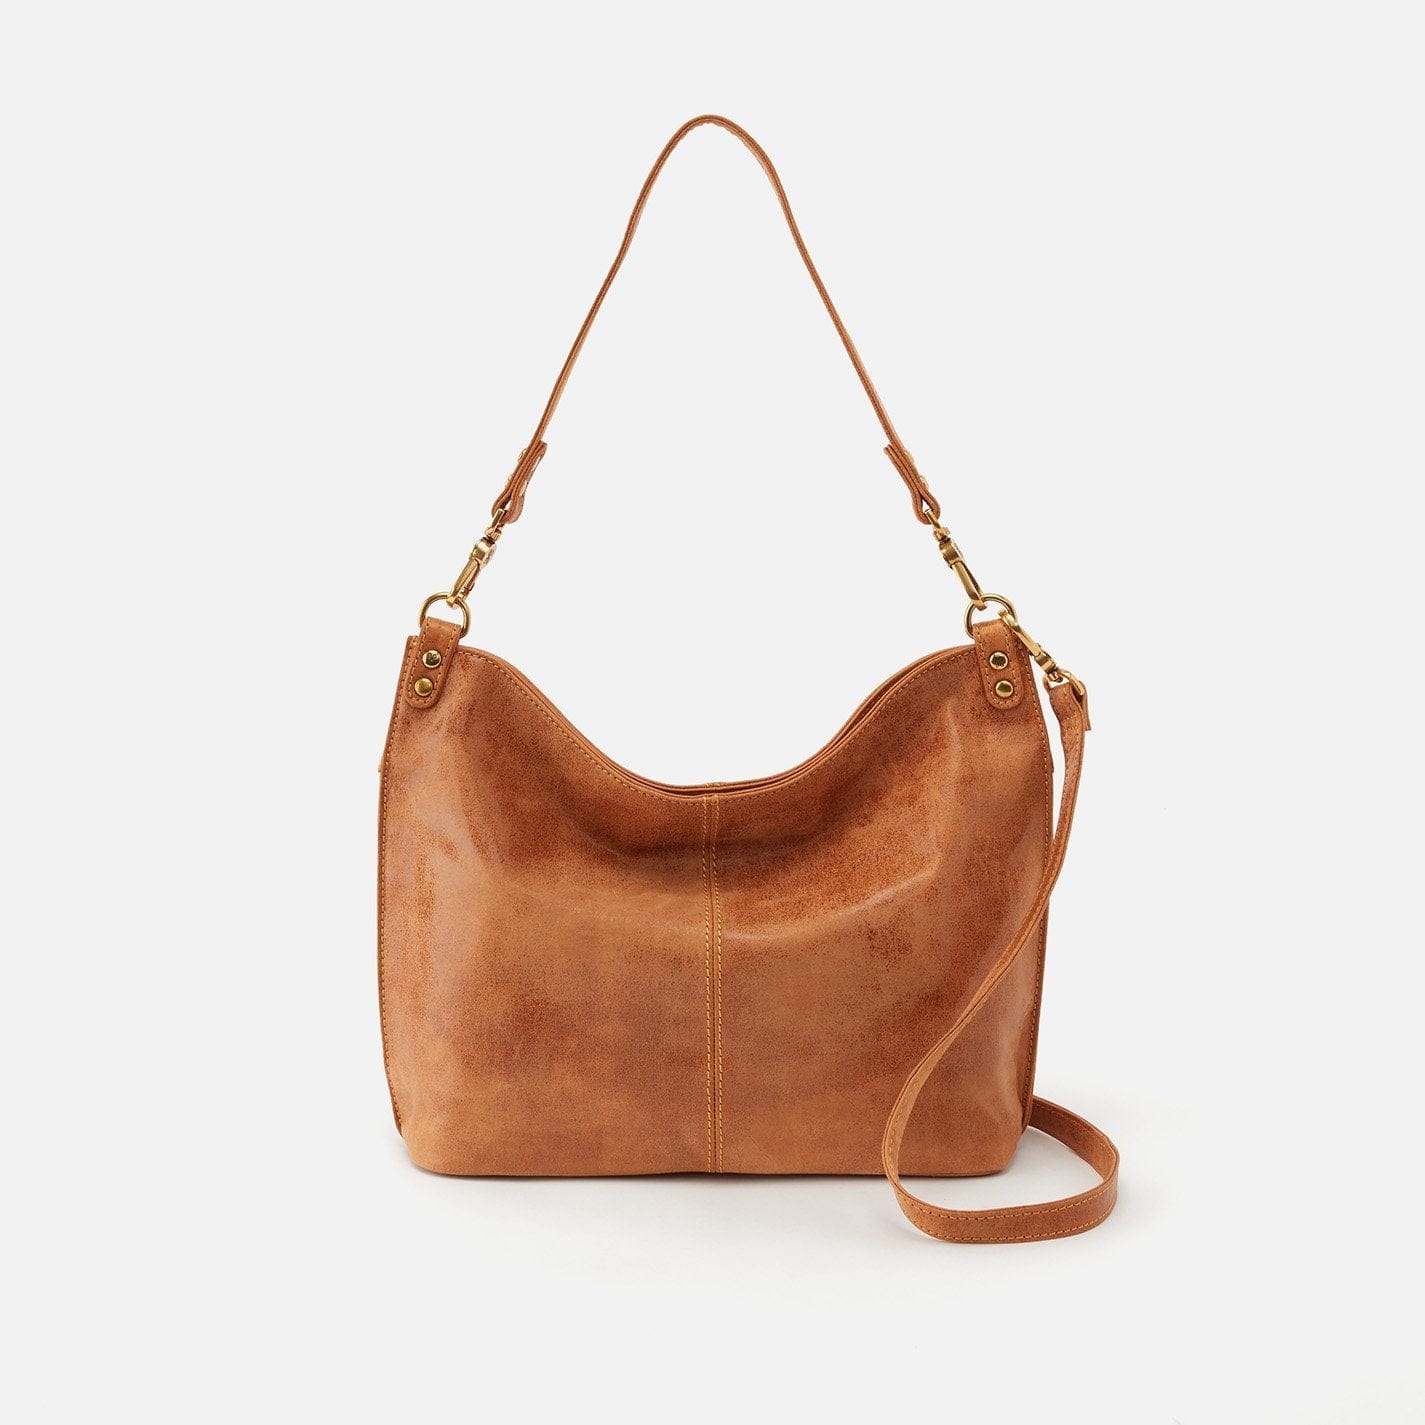 Wish Boutique - The perfect messenger bag, Louis Vuitton NOW $589